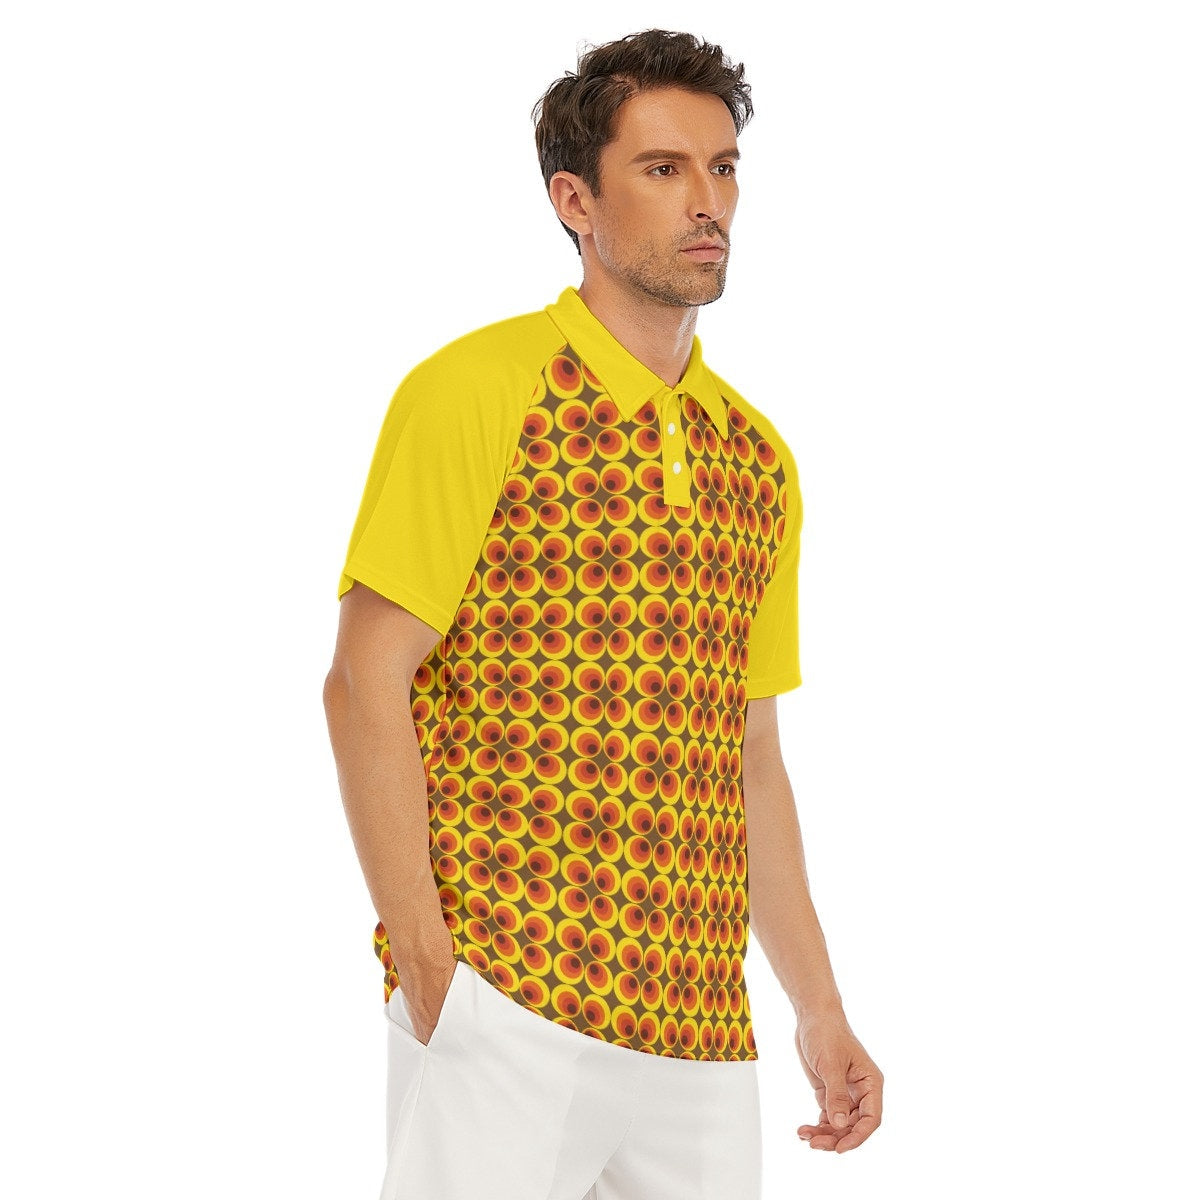 Polo Shirt, Vintage polo, Men's polo shirt, Yellow polo shirt, 70s shirt men,Mod shirt,Men's vintage shirt,vintage style shirt,plus size men